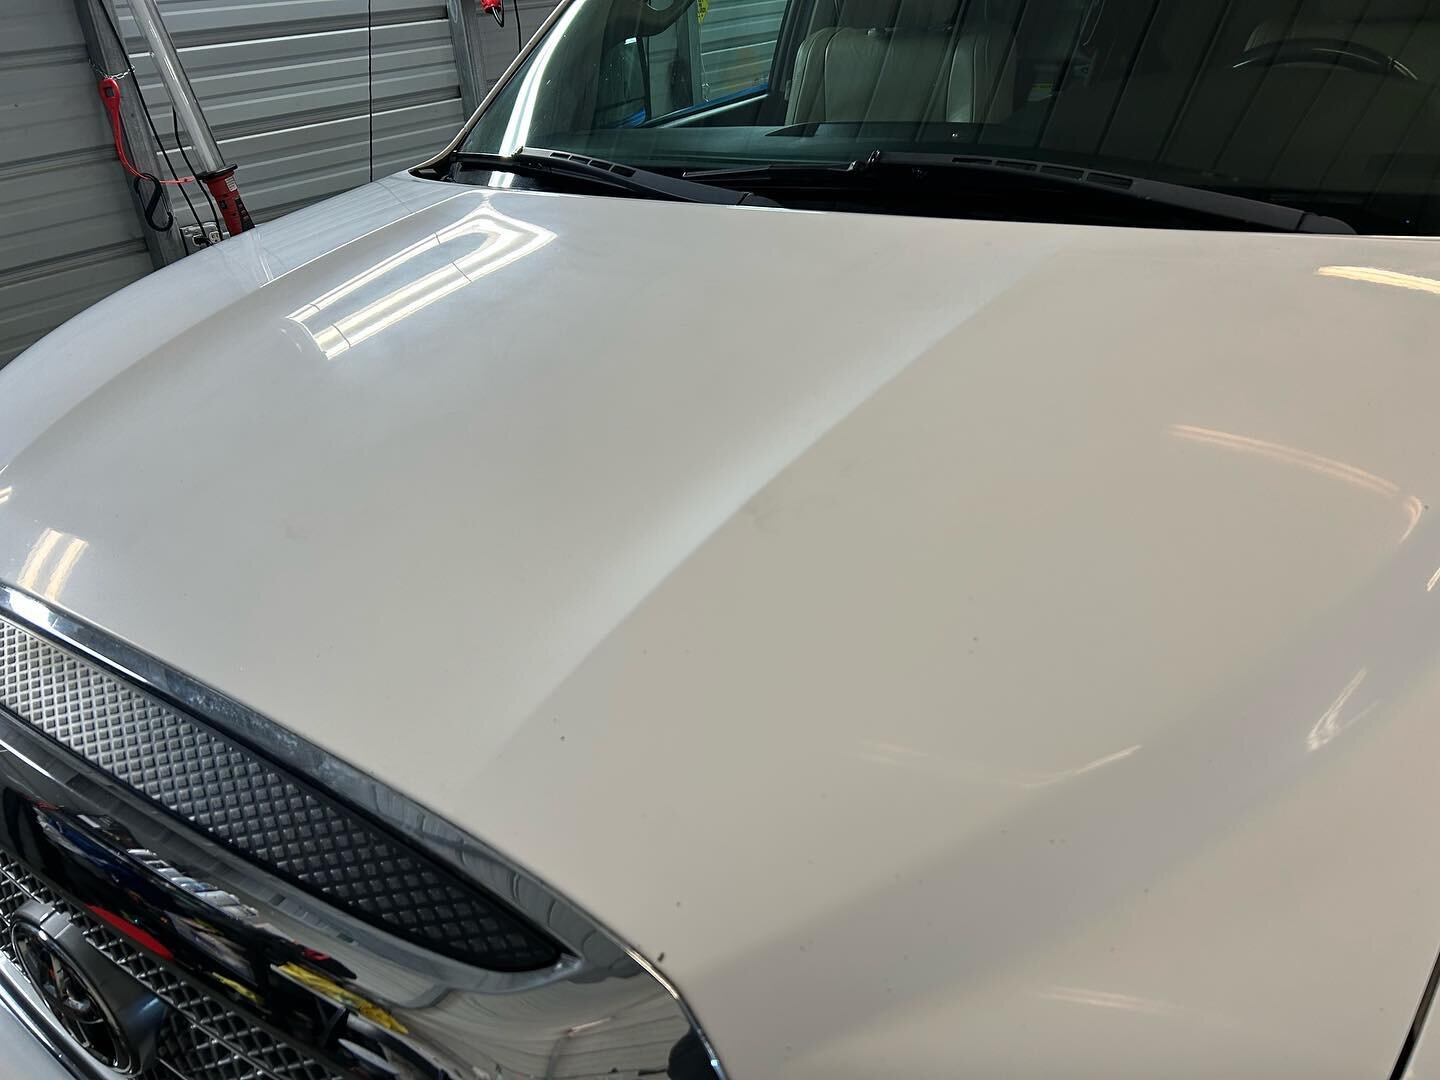 Mzmobile Autodetail 

Before and after.  paint restoration and ceramic coating applications.
#ᴄᴇʀᴀᴍɪᴄᴄᴏᴀᴛɪɴɢ 
👌😍
(425)326-2768
automz@outlook.com
www.automzdetail.com